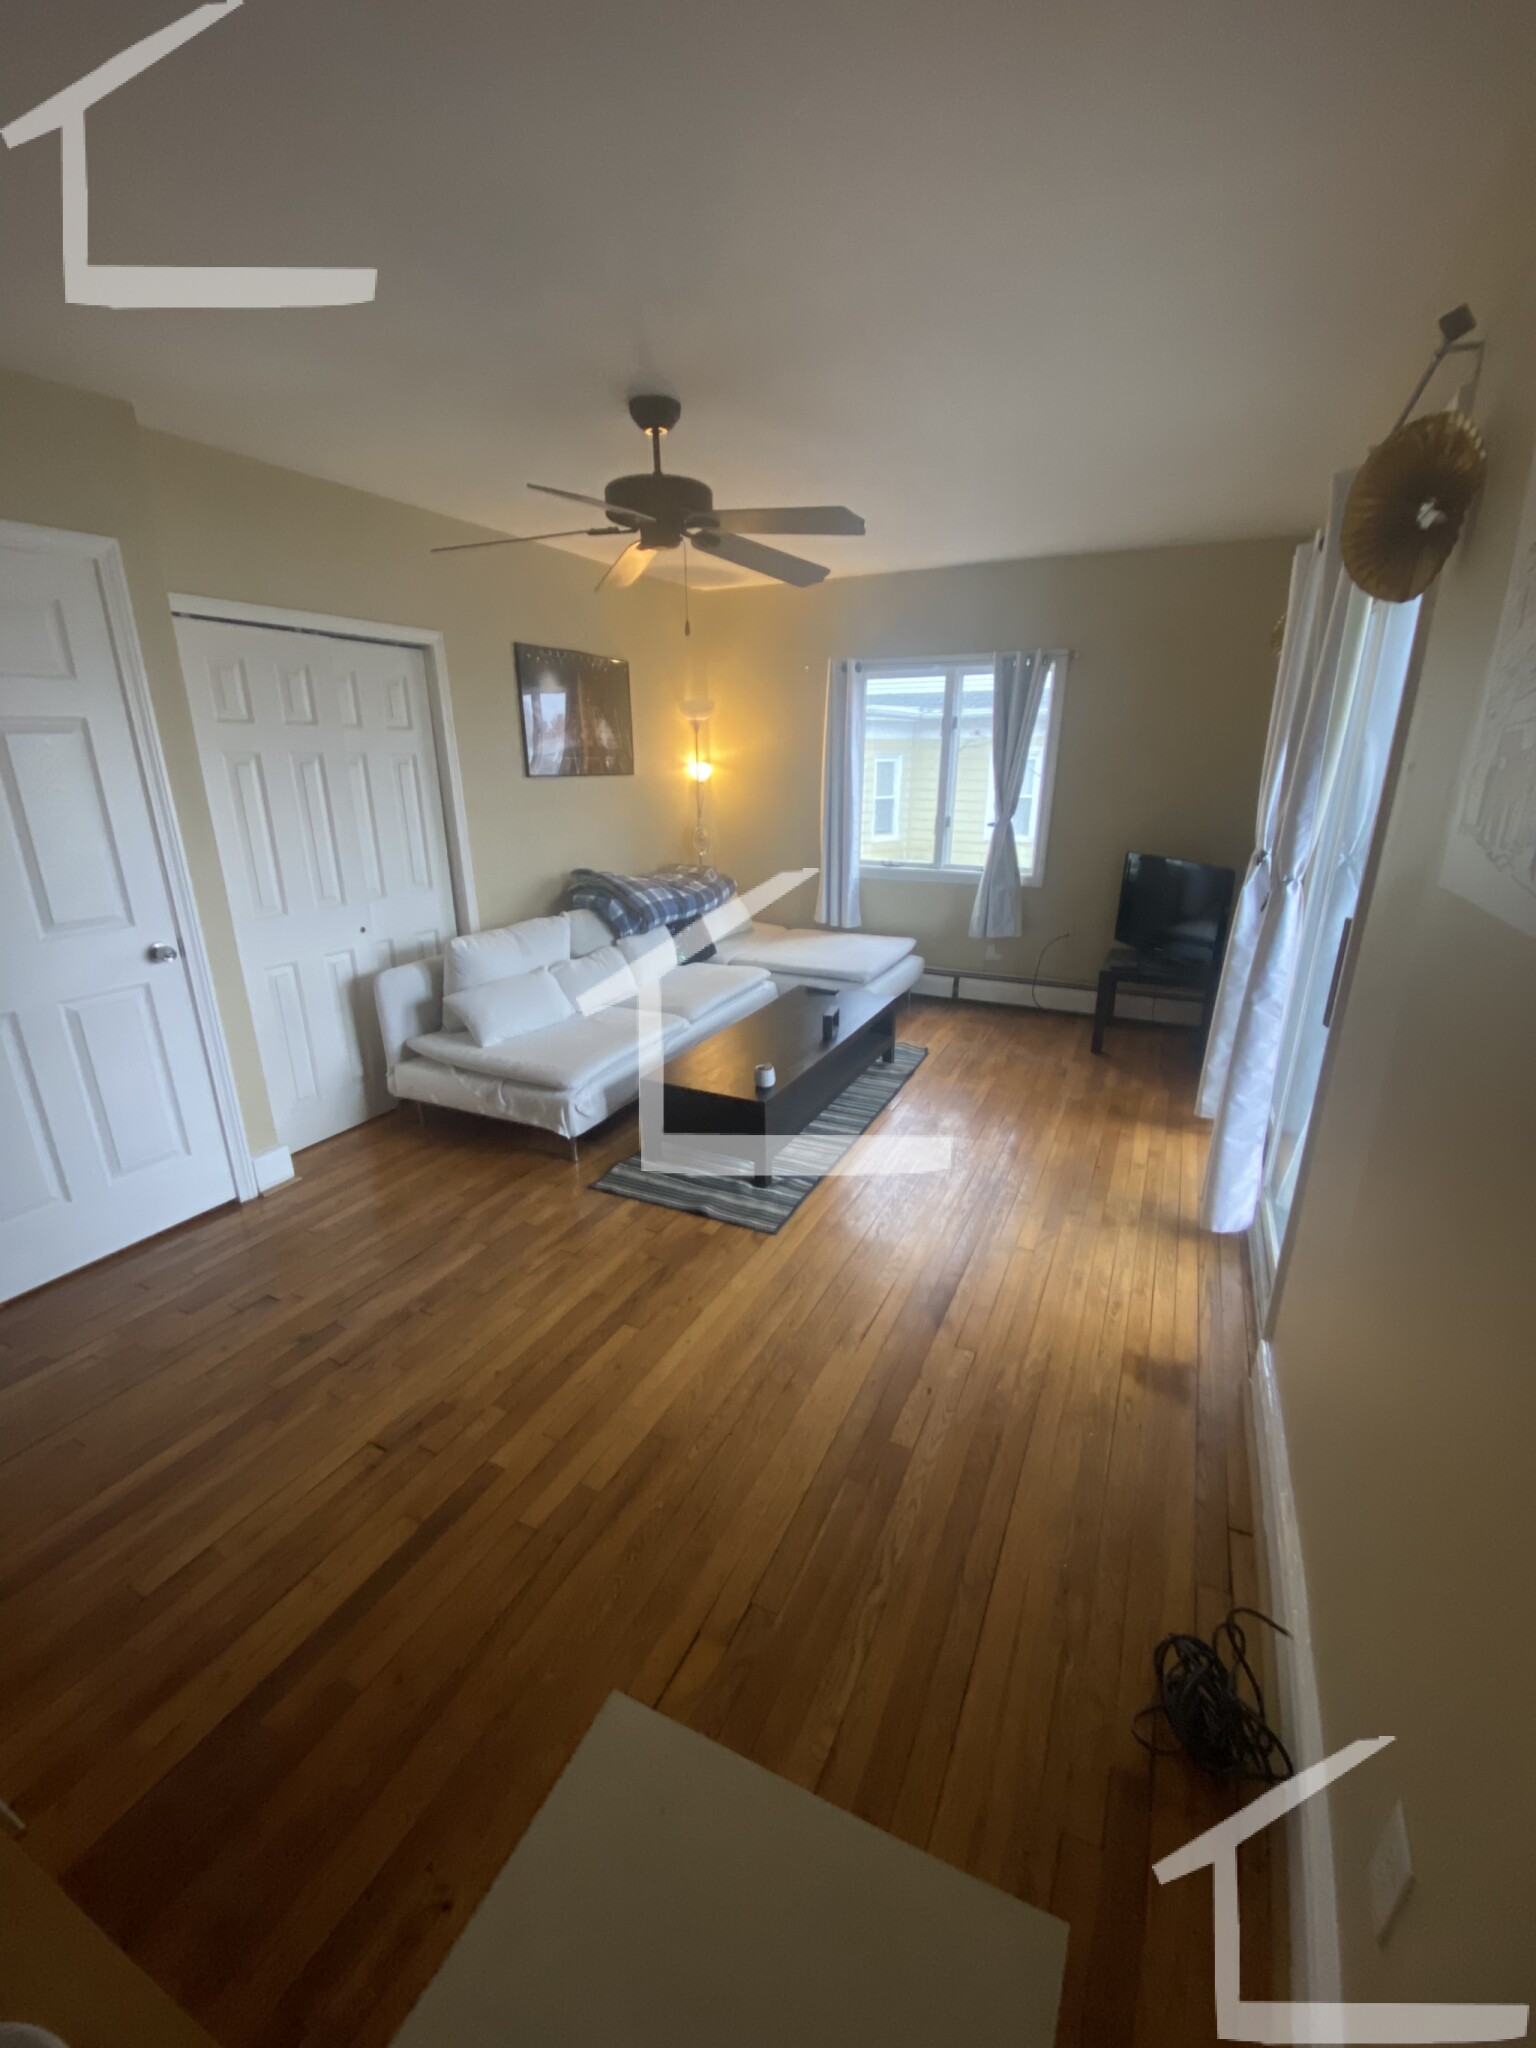 Photos of apartment on Glen St.,Somerville MA 02145